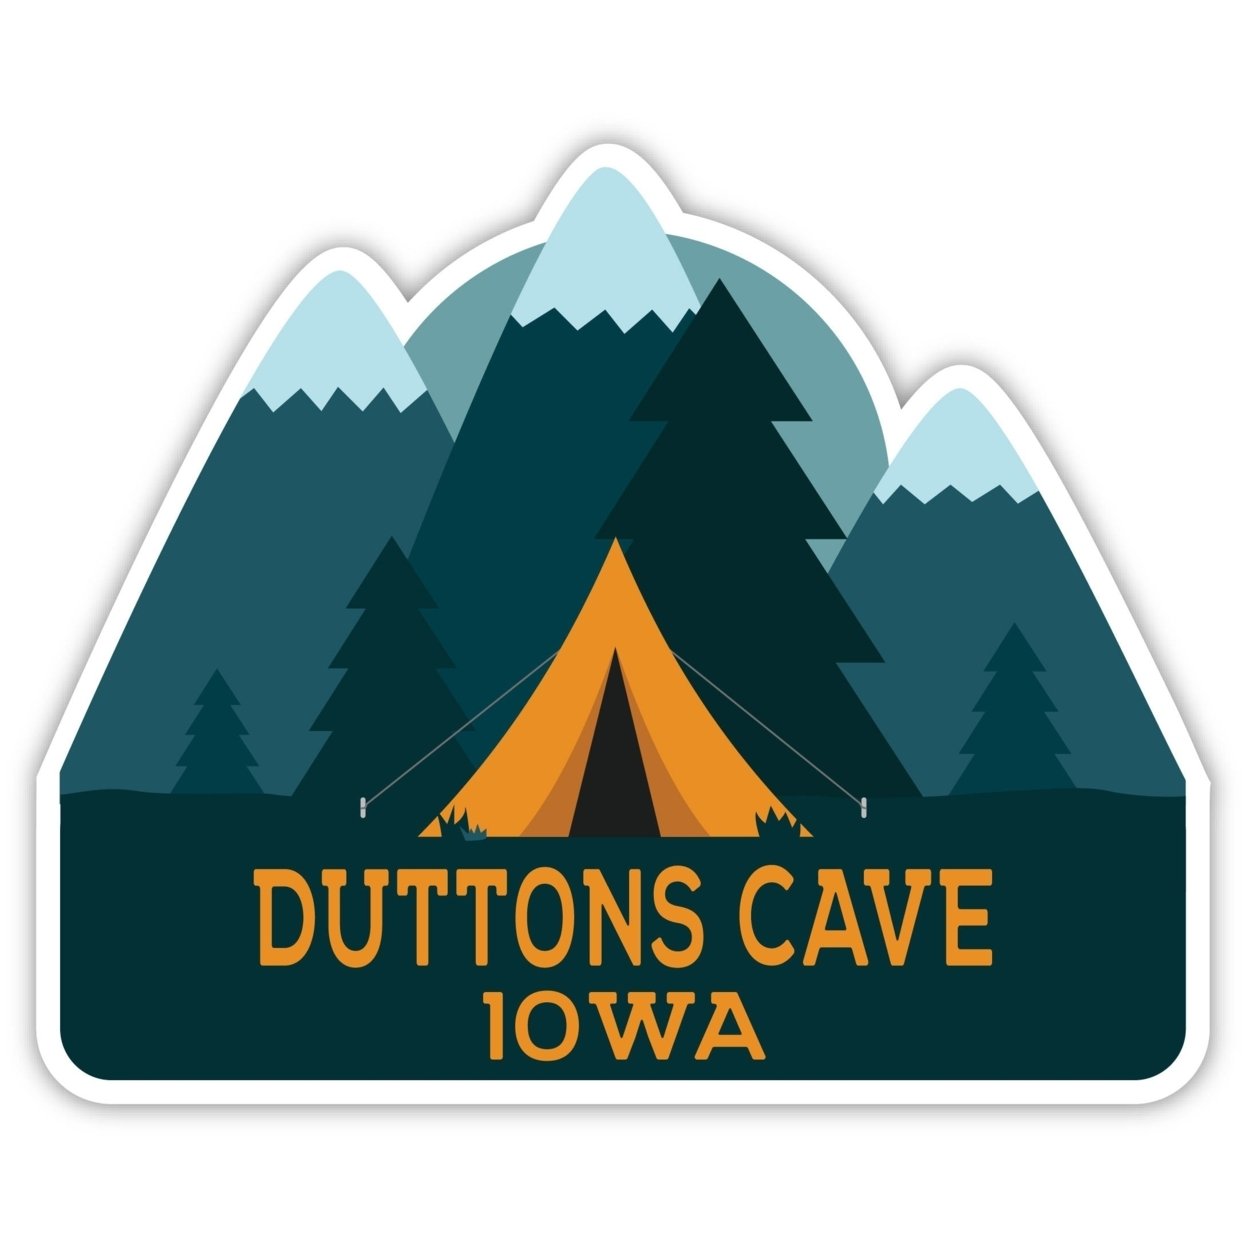 Duttons Cave Iowa Souvenir Decorative Stickers (Choose Theme And Size) - 4-Pack, 2-Inch, Tent